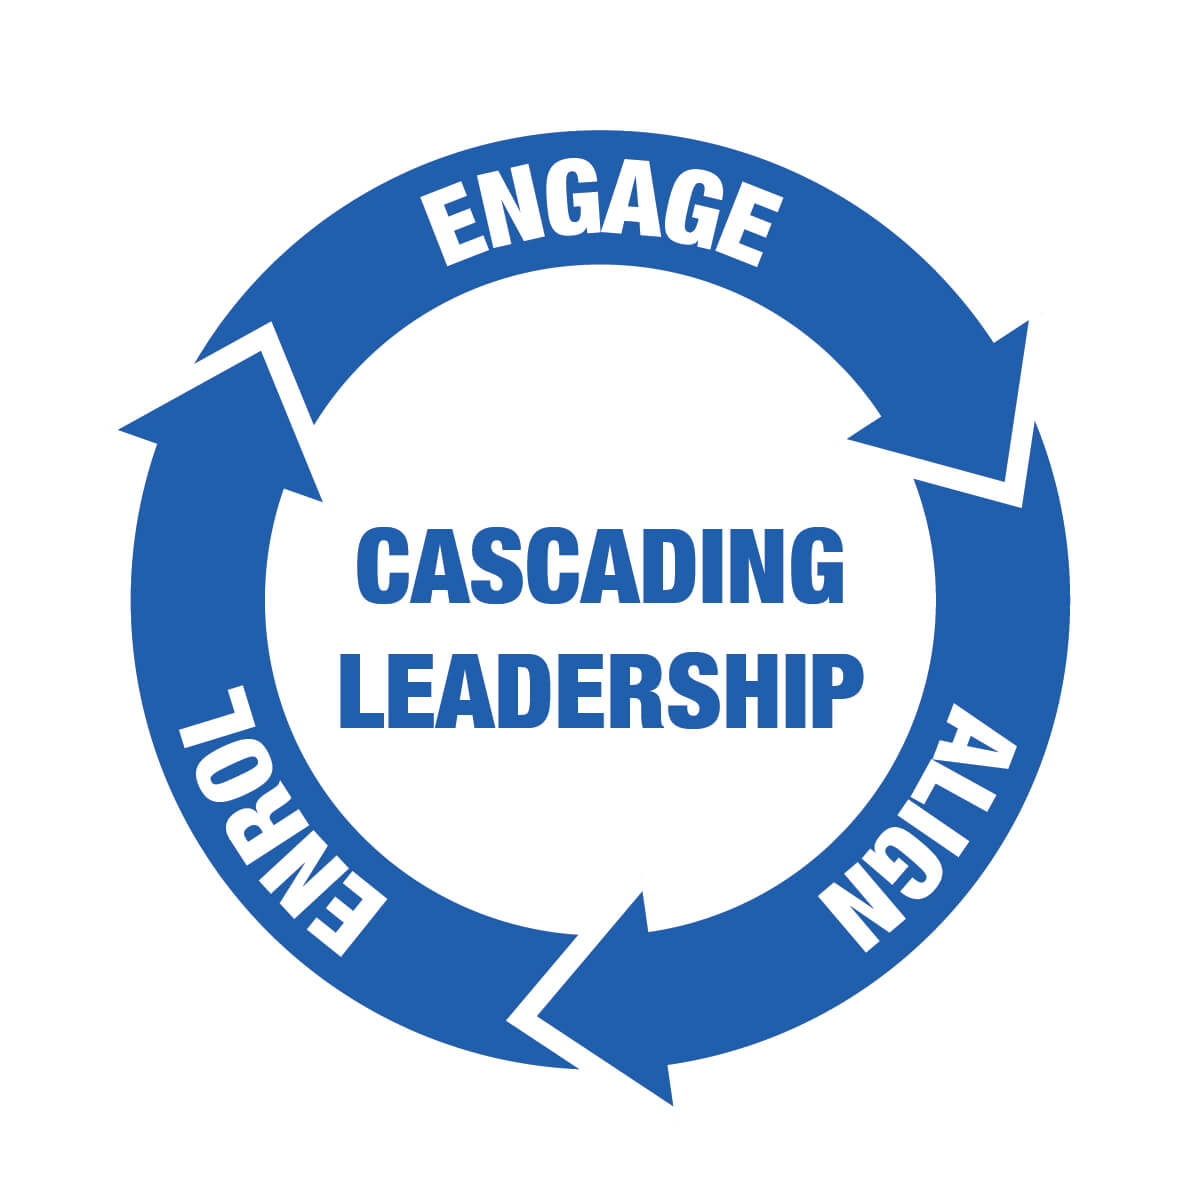 Cascading Leadership – Engage, Align, Enrol